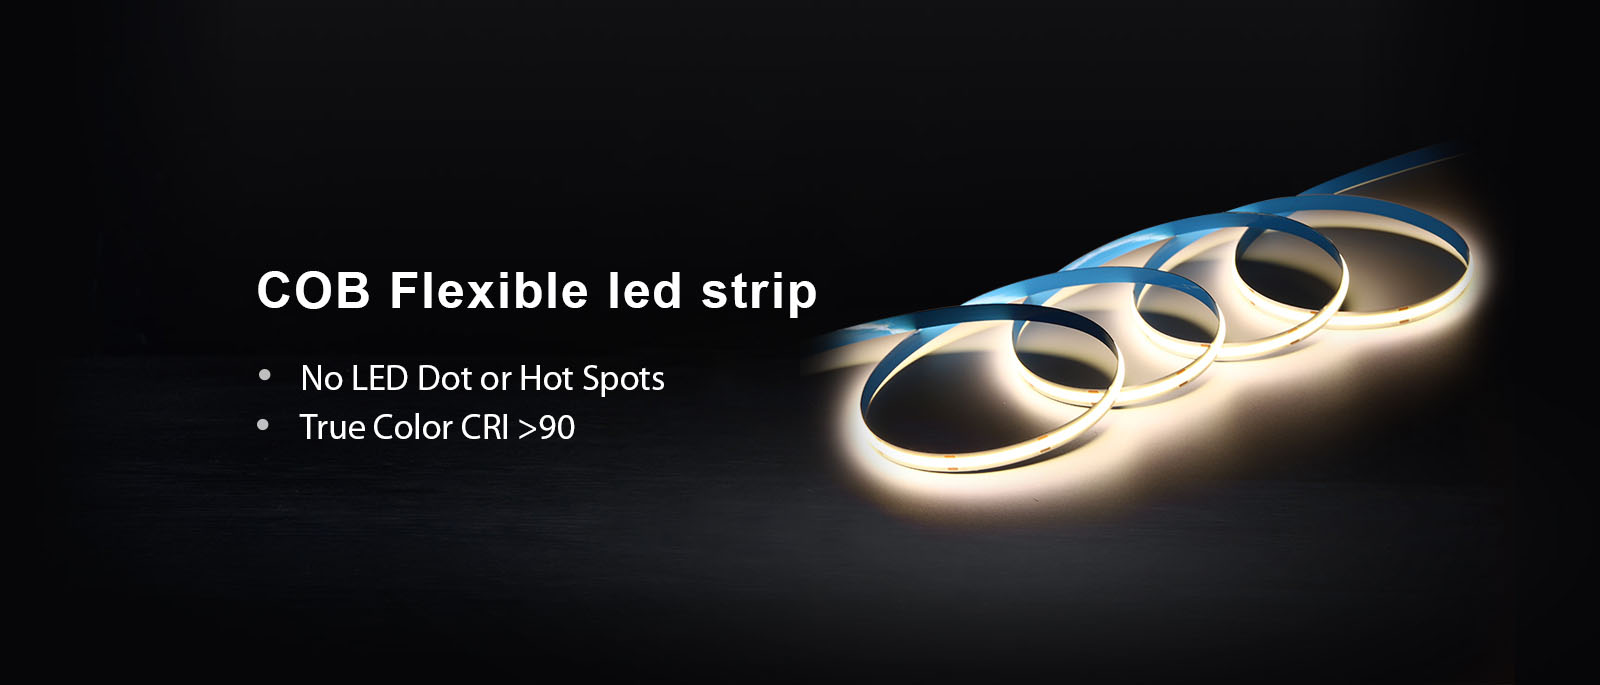 COB Flexible led strip